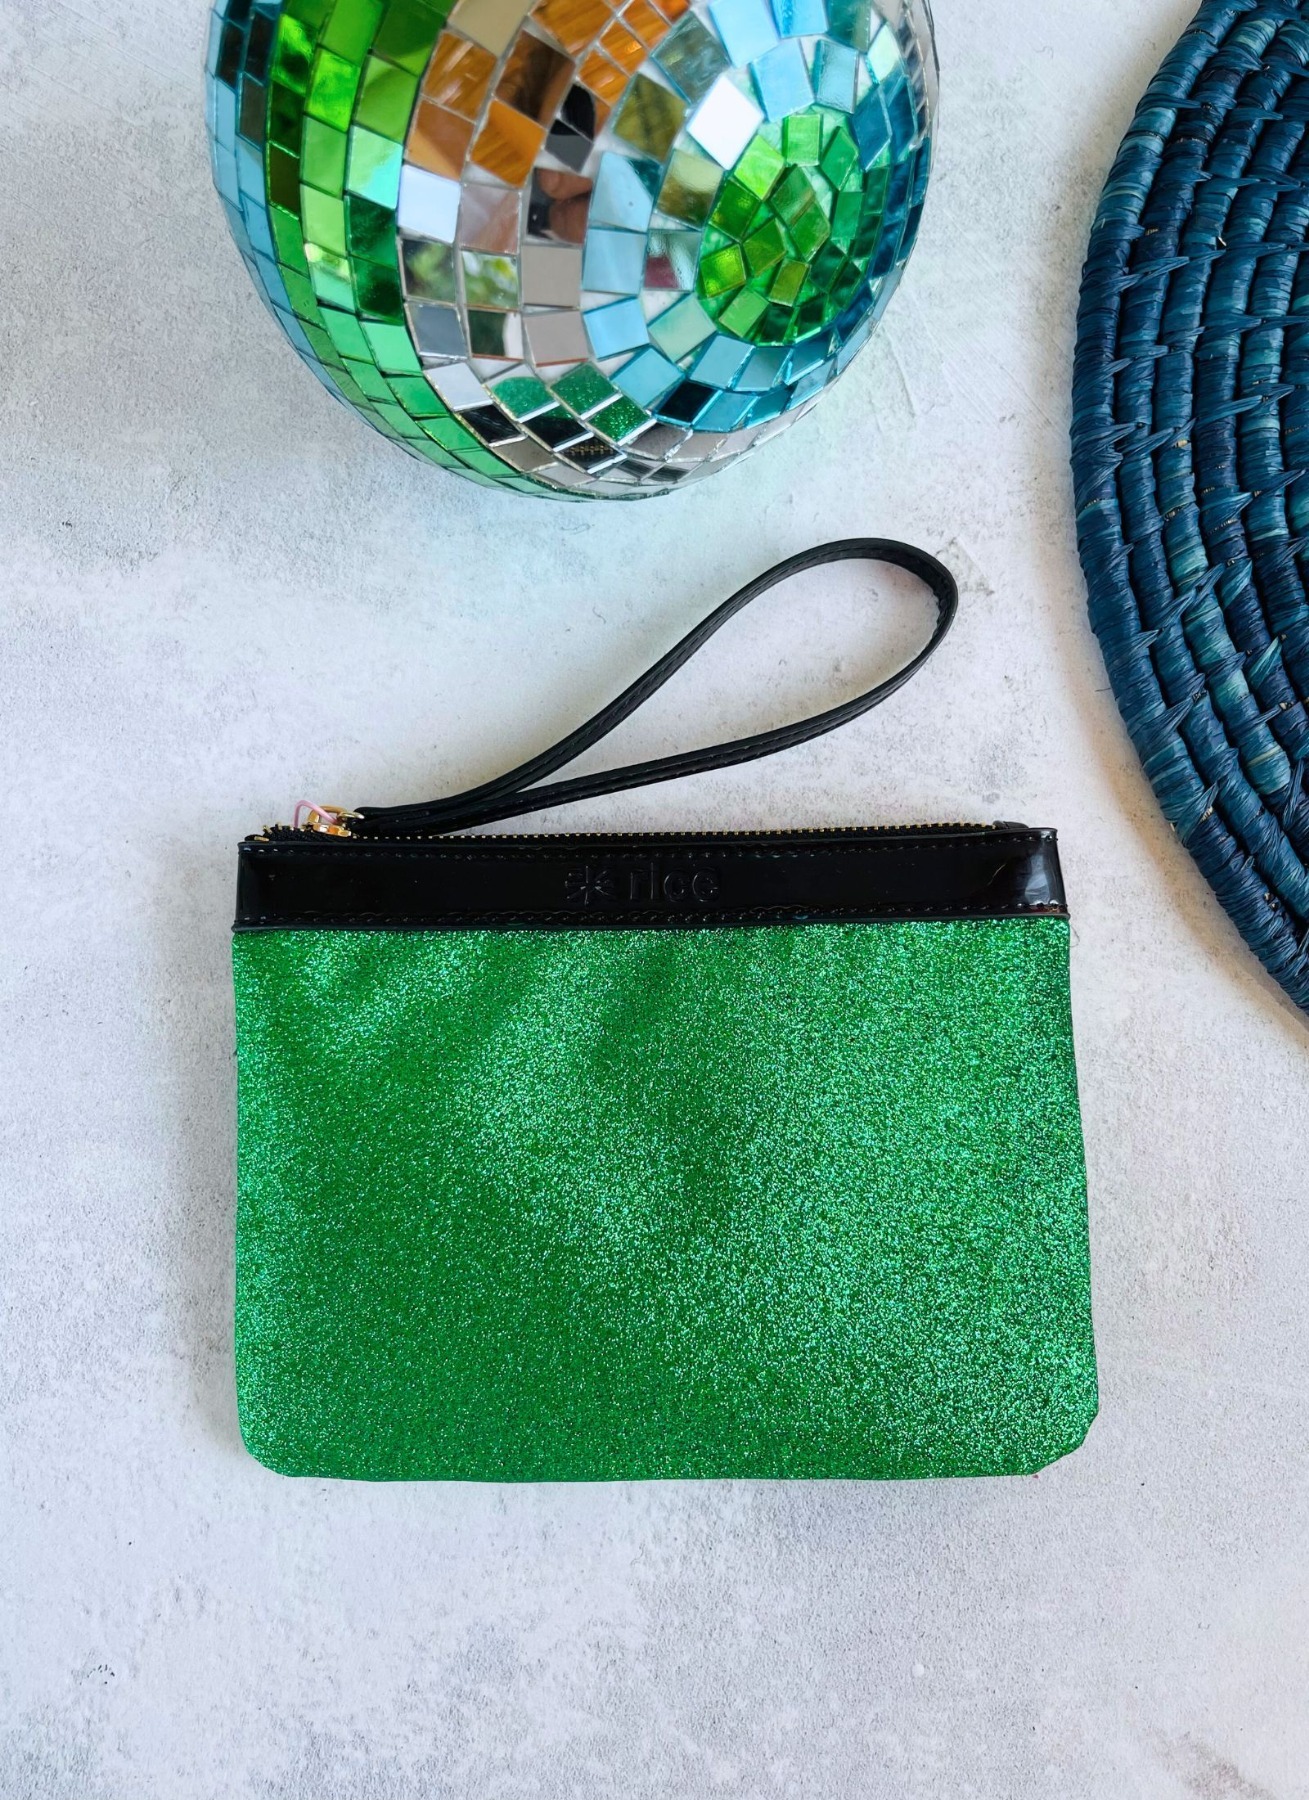 RICE | Tasche |Clutch | glitter | grün